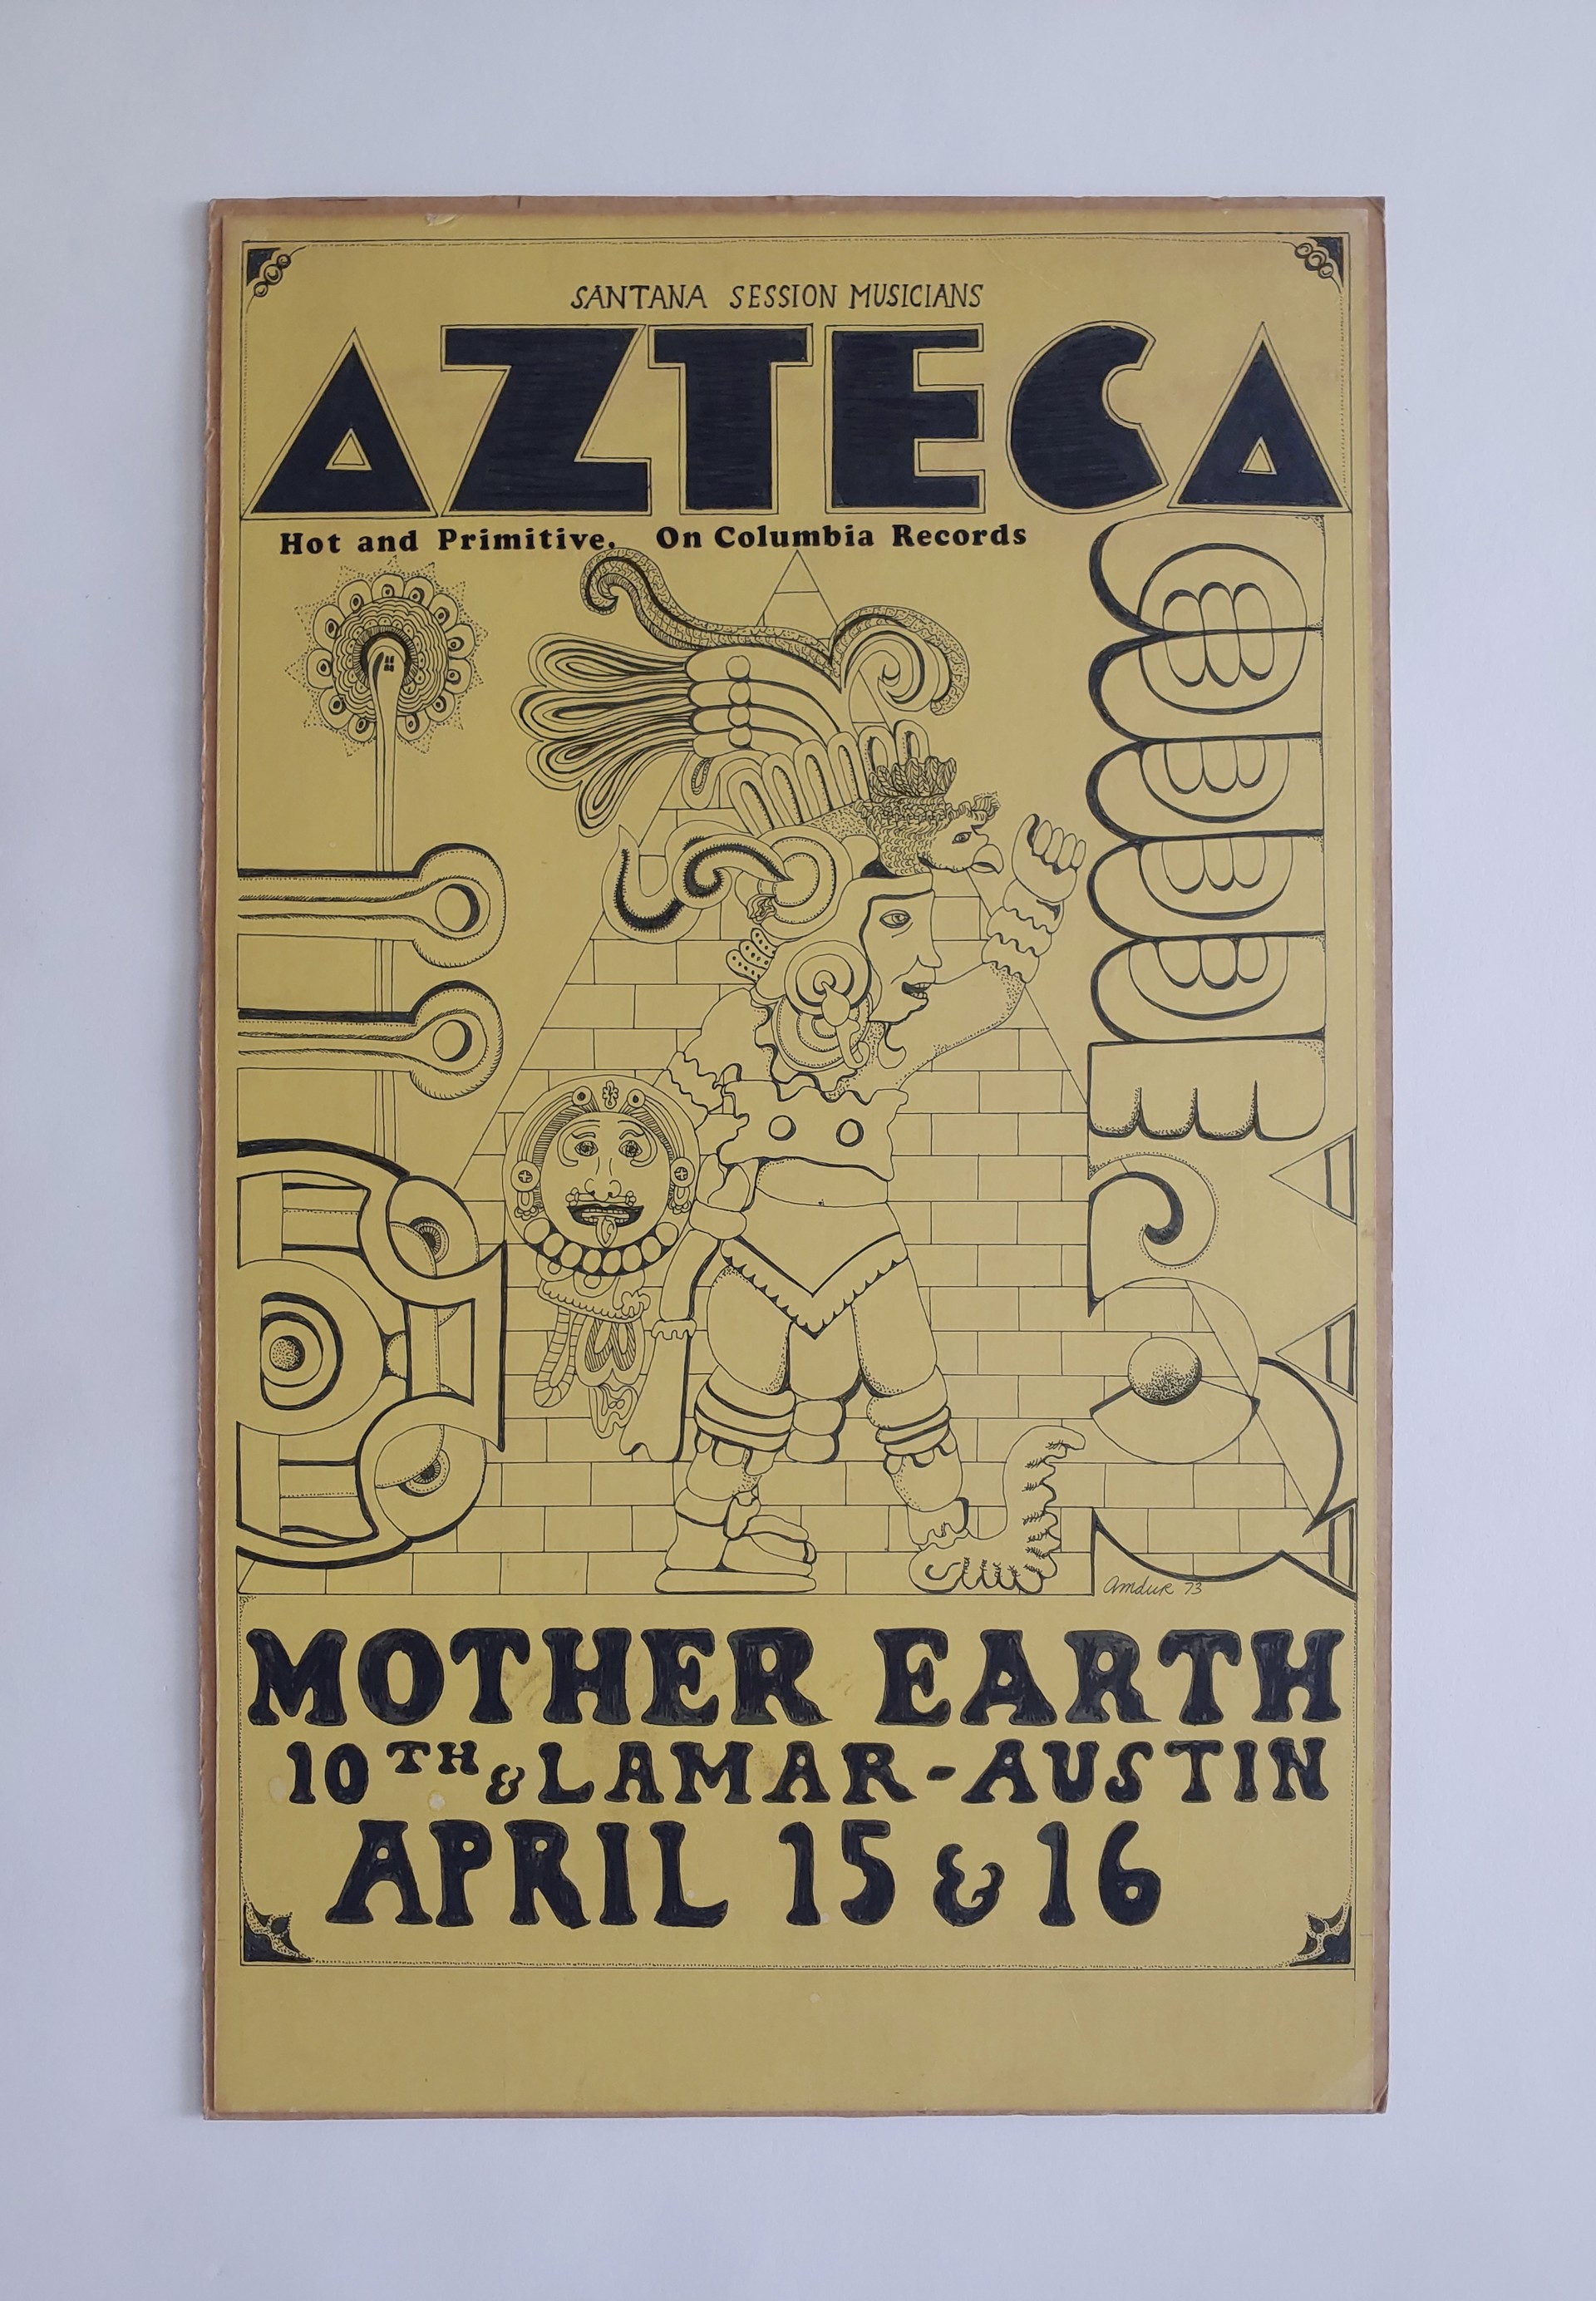 Azteca - Poster by David Amdur